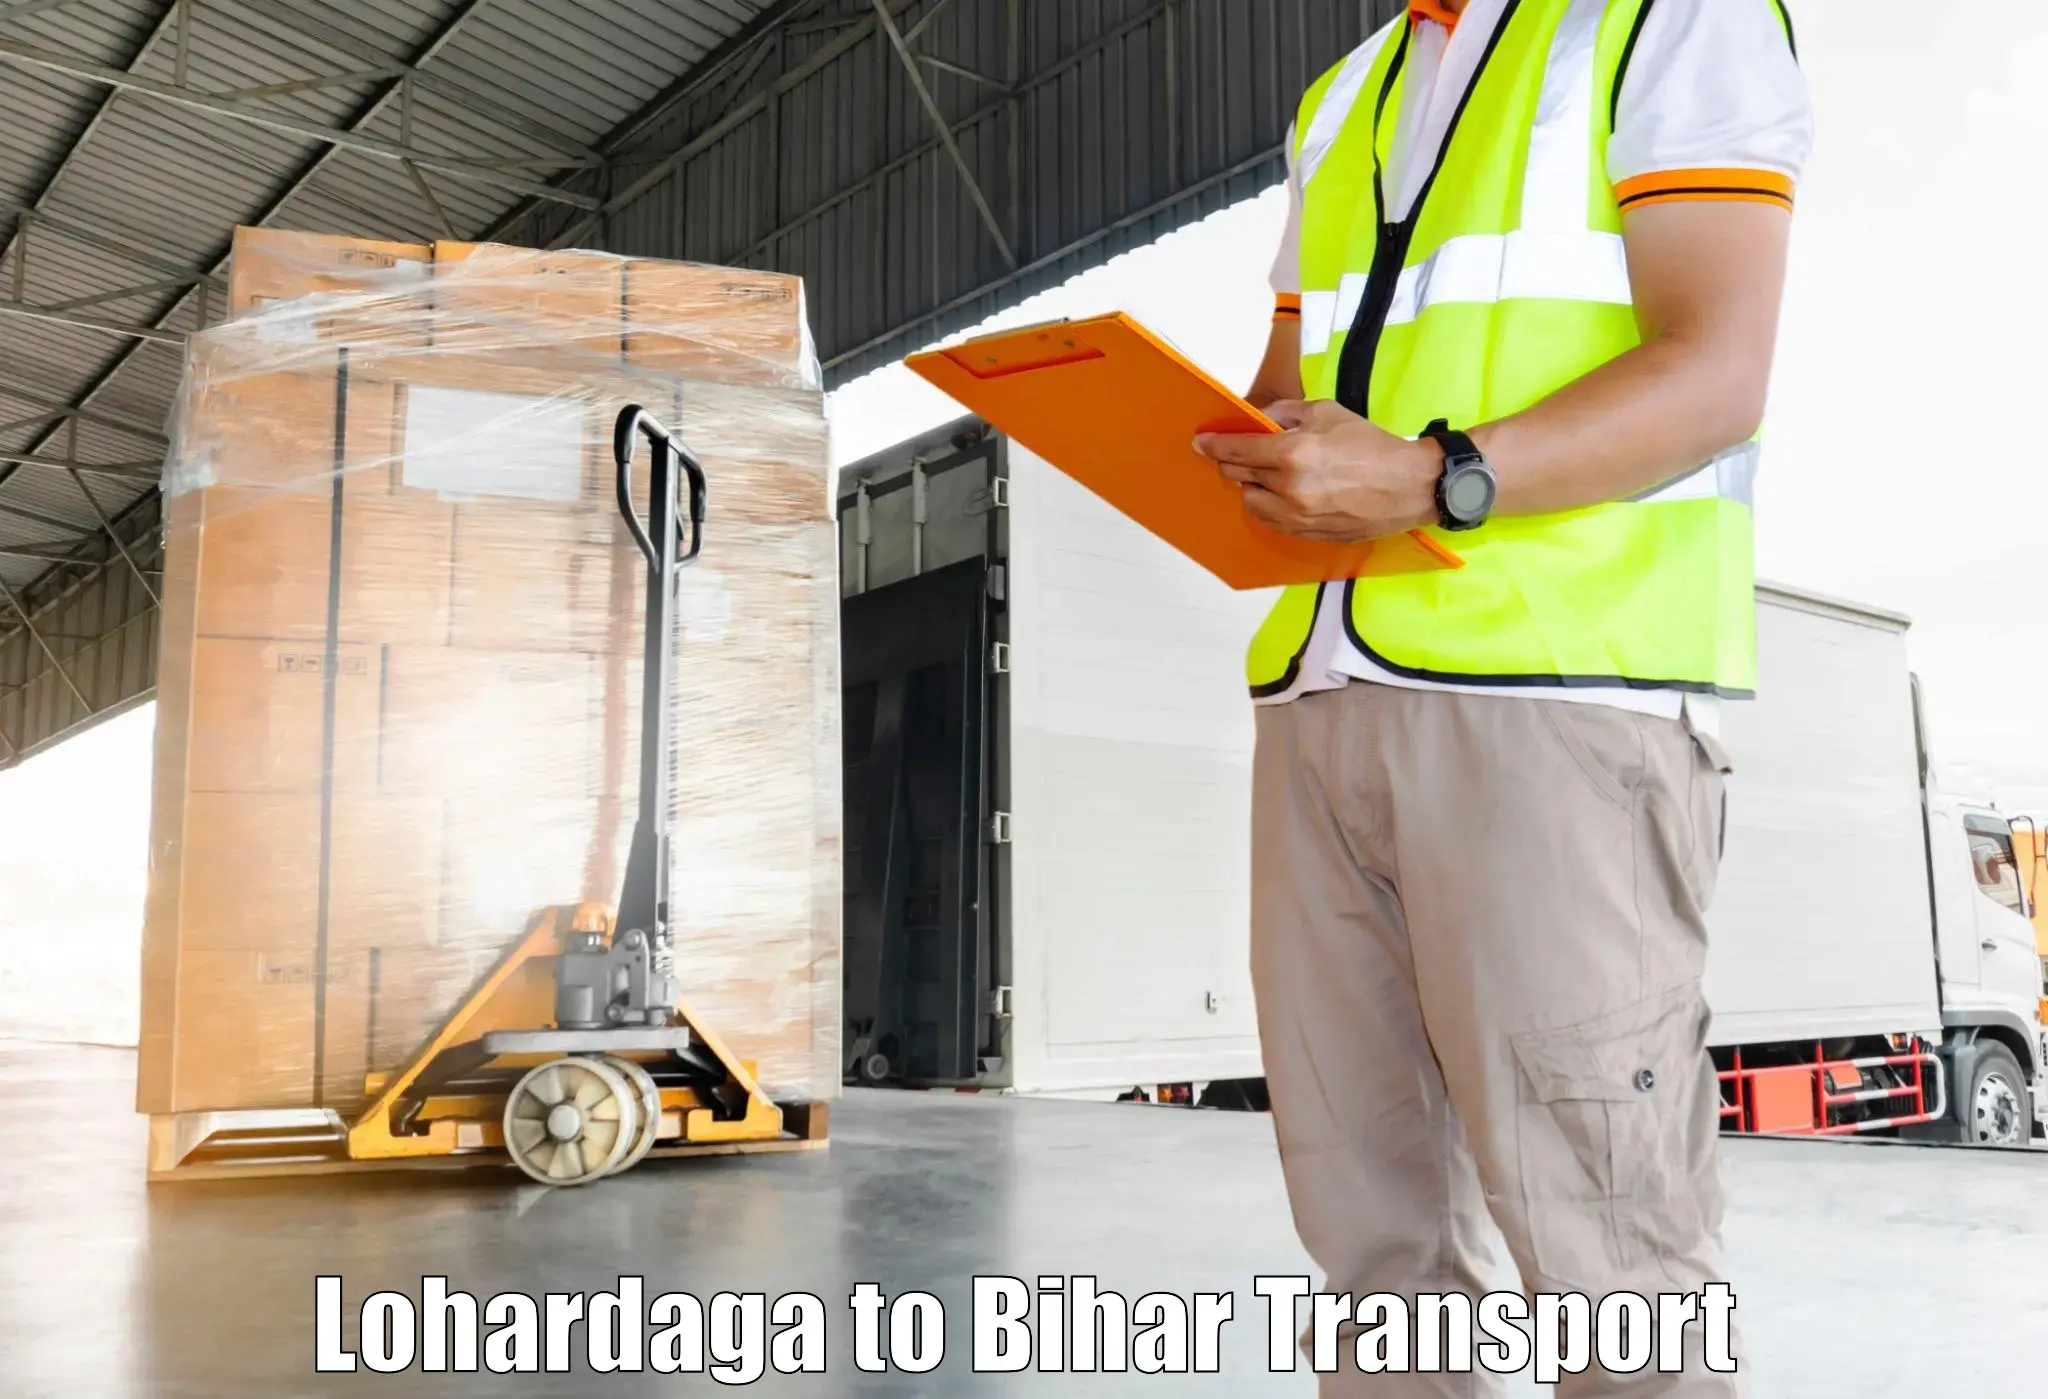 Transport bike from one state to another Lohardaga to Bihar